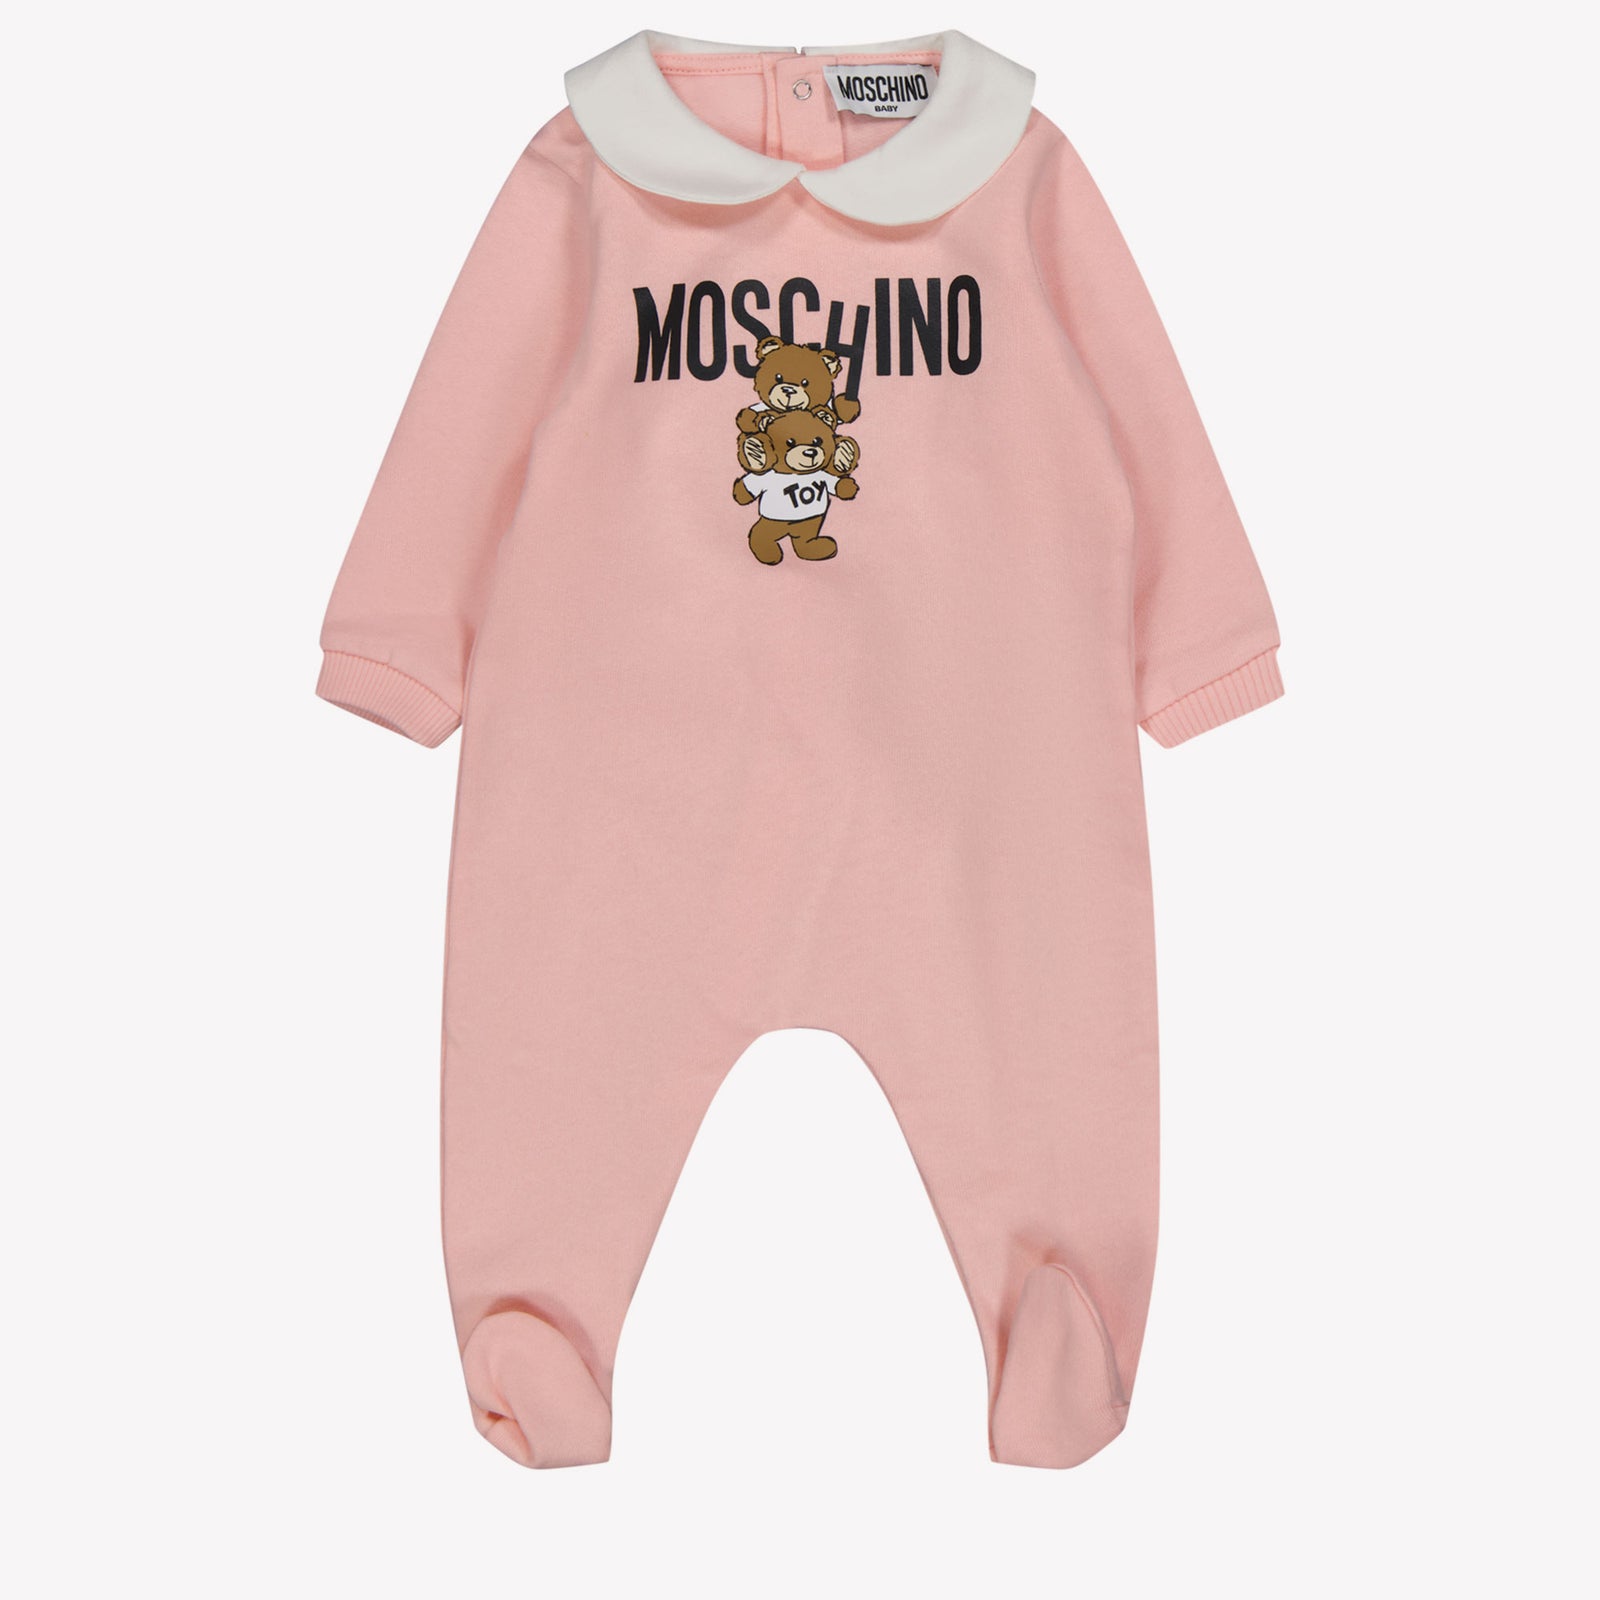 Moschino 赤ちゃんユニセックスボックスパックライトピンク